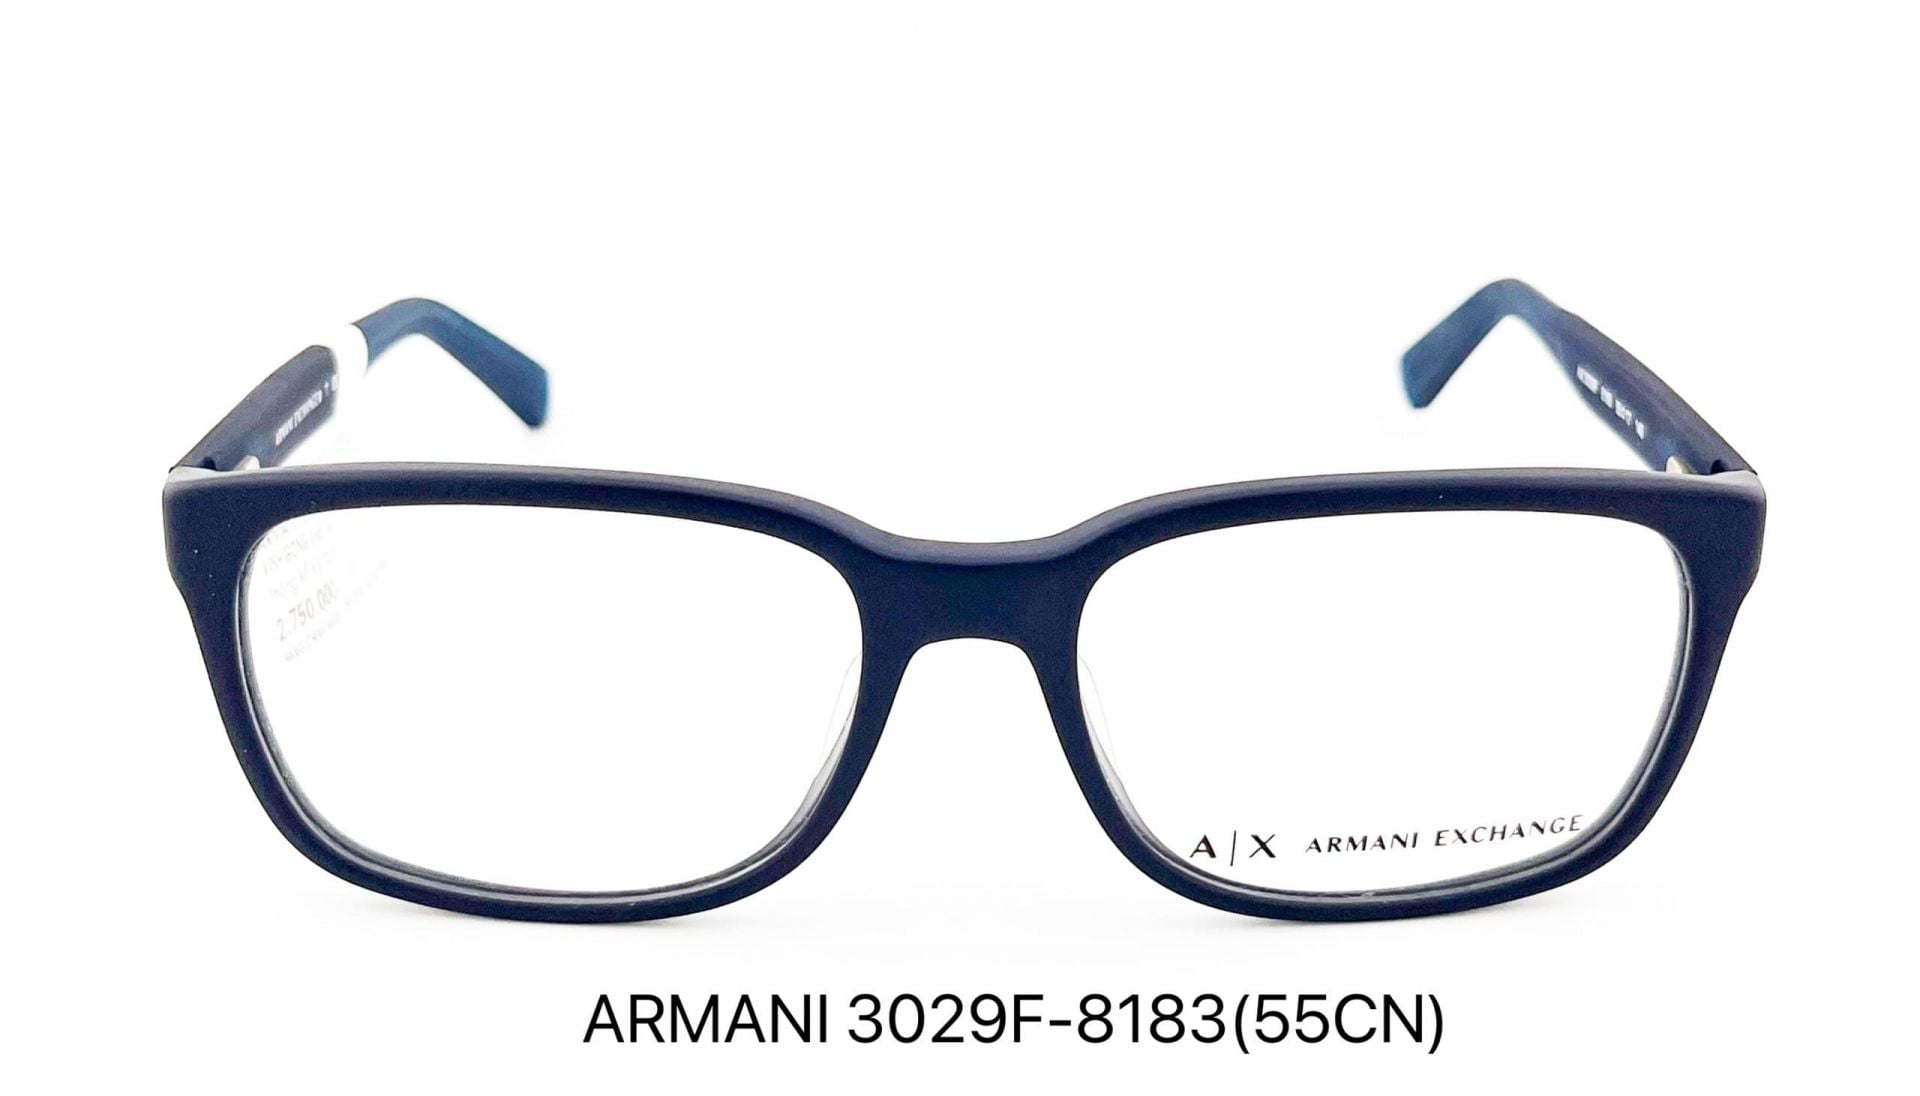 Gọng kính ARMANI EXCHANGE 3029F-8183 (55CN)